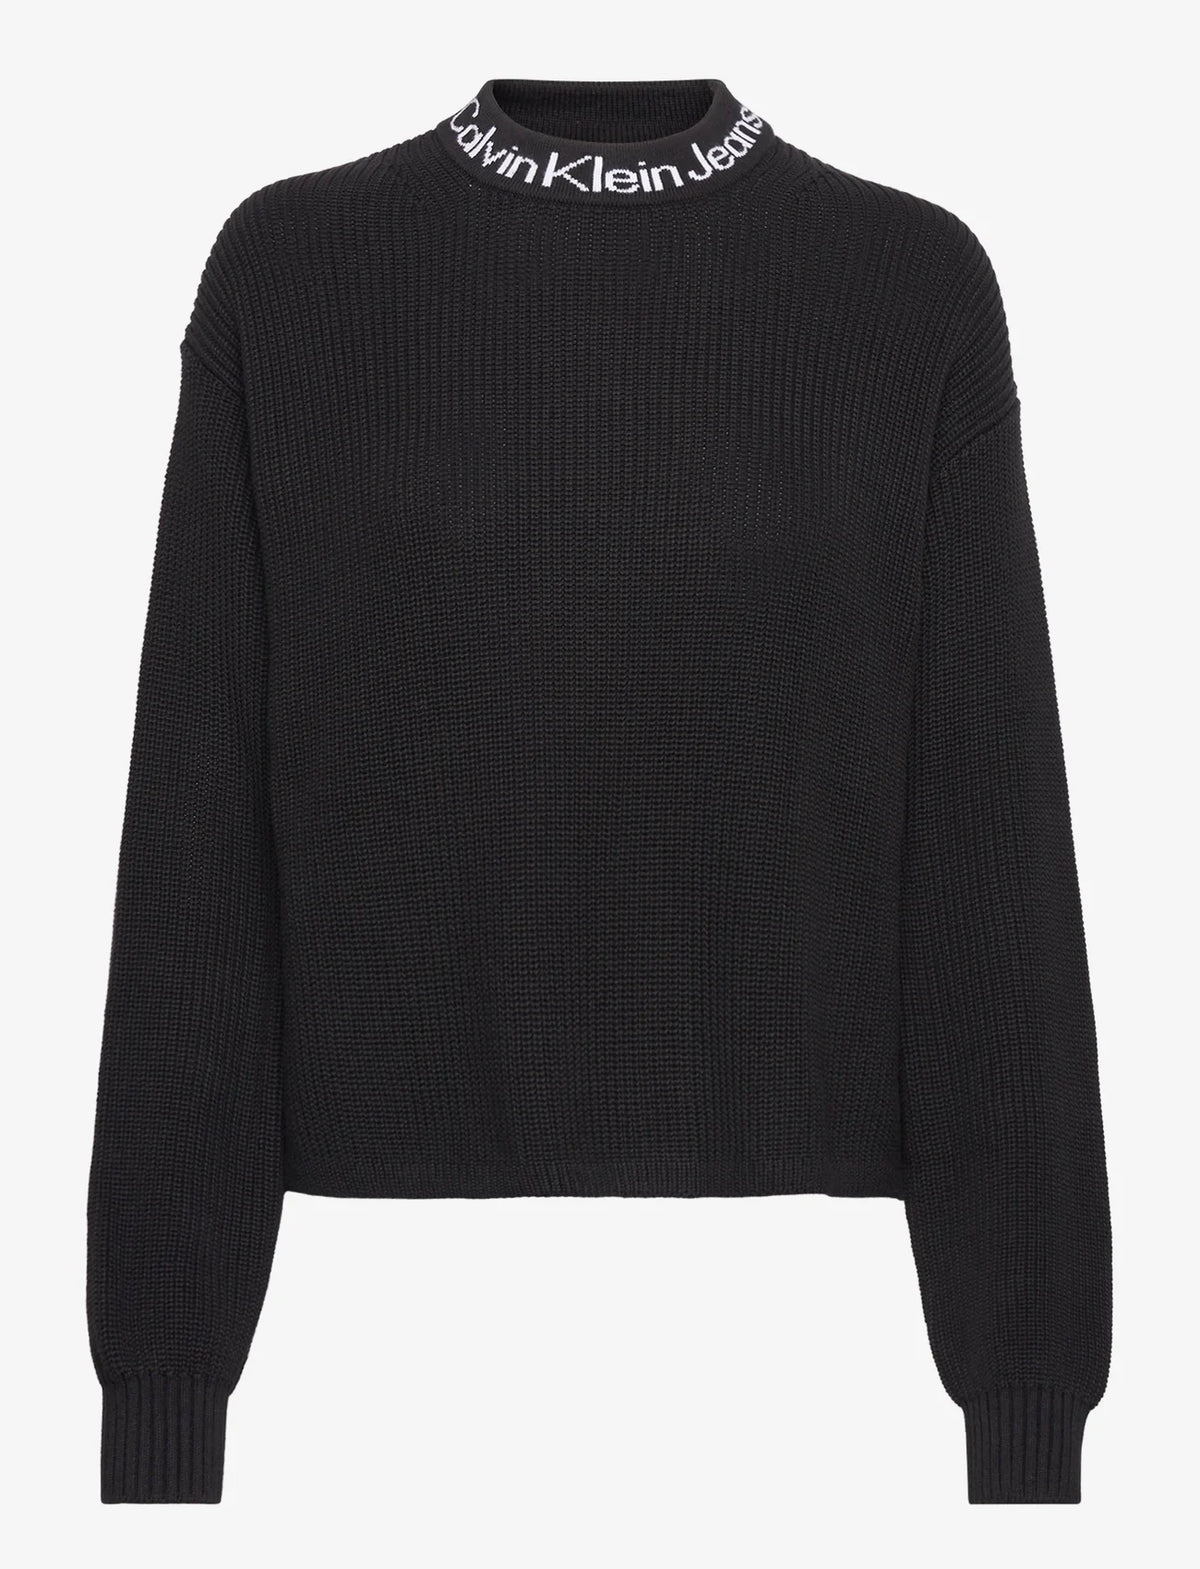 Calvin Klein Logo Intarsia Loose Sweater Black